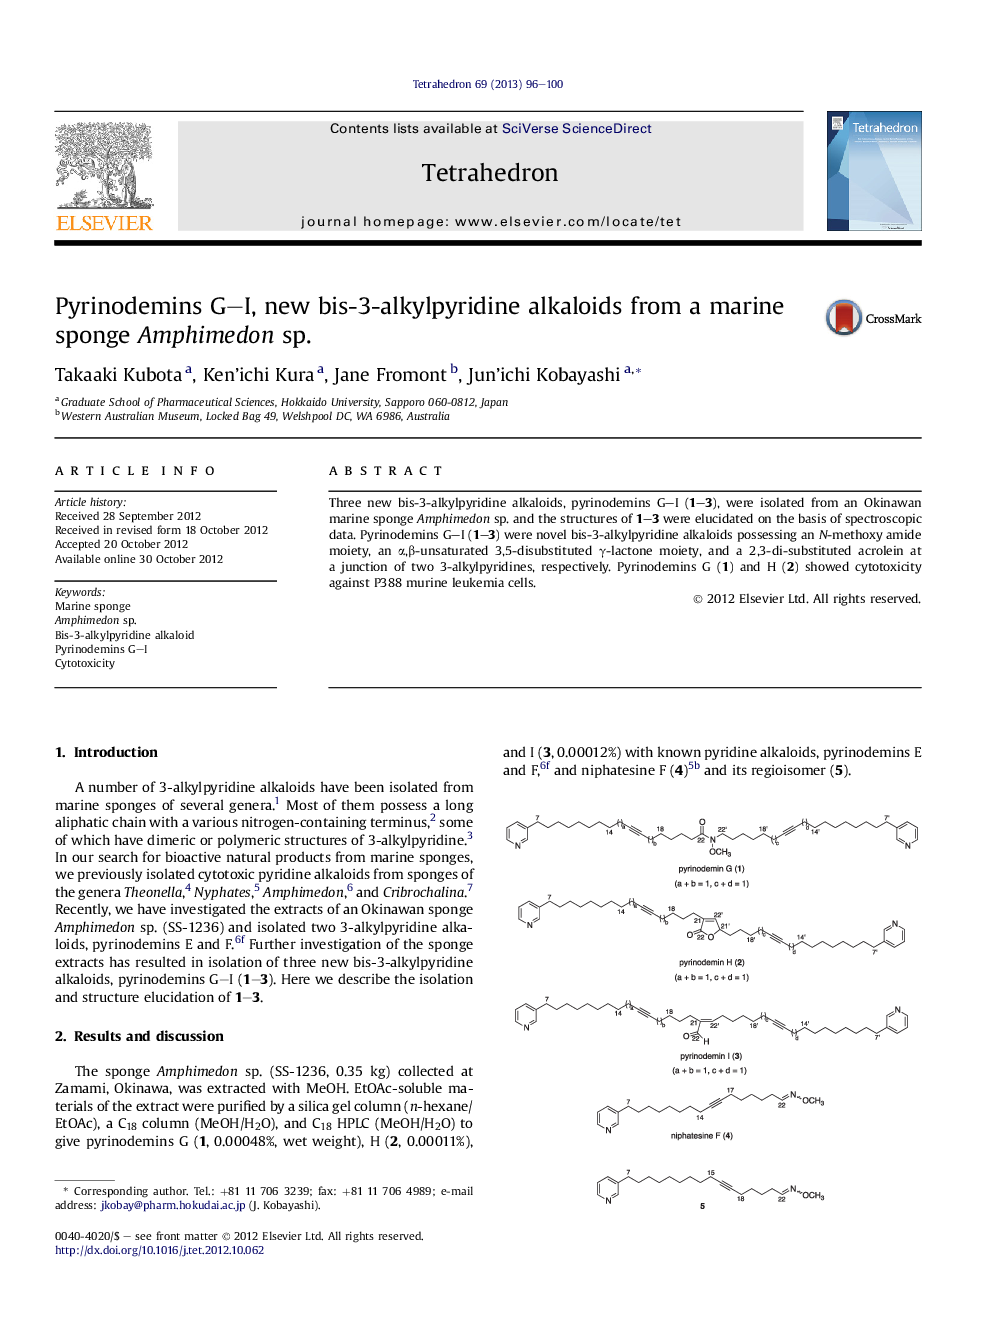 Pyrinodemins G-I, new bis-3-alkylpyridine alkaloids from a marine sponge Amphimedon sp.